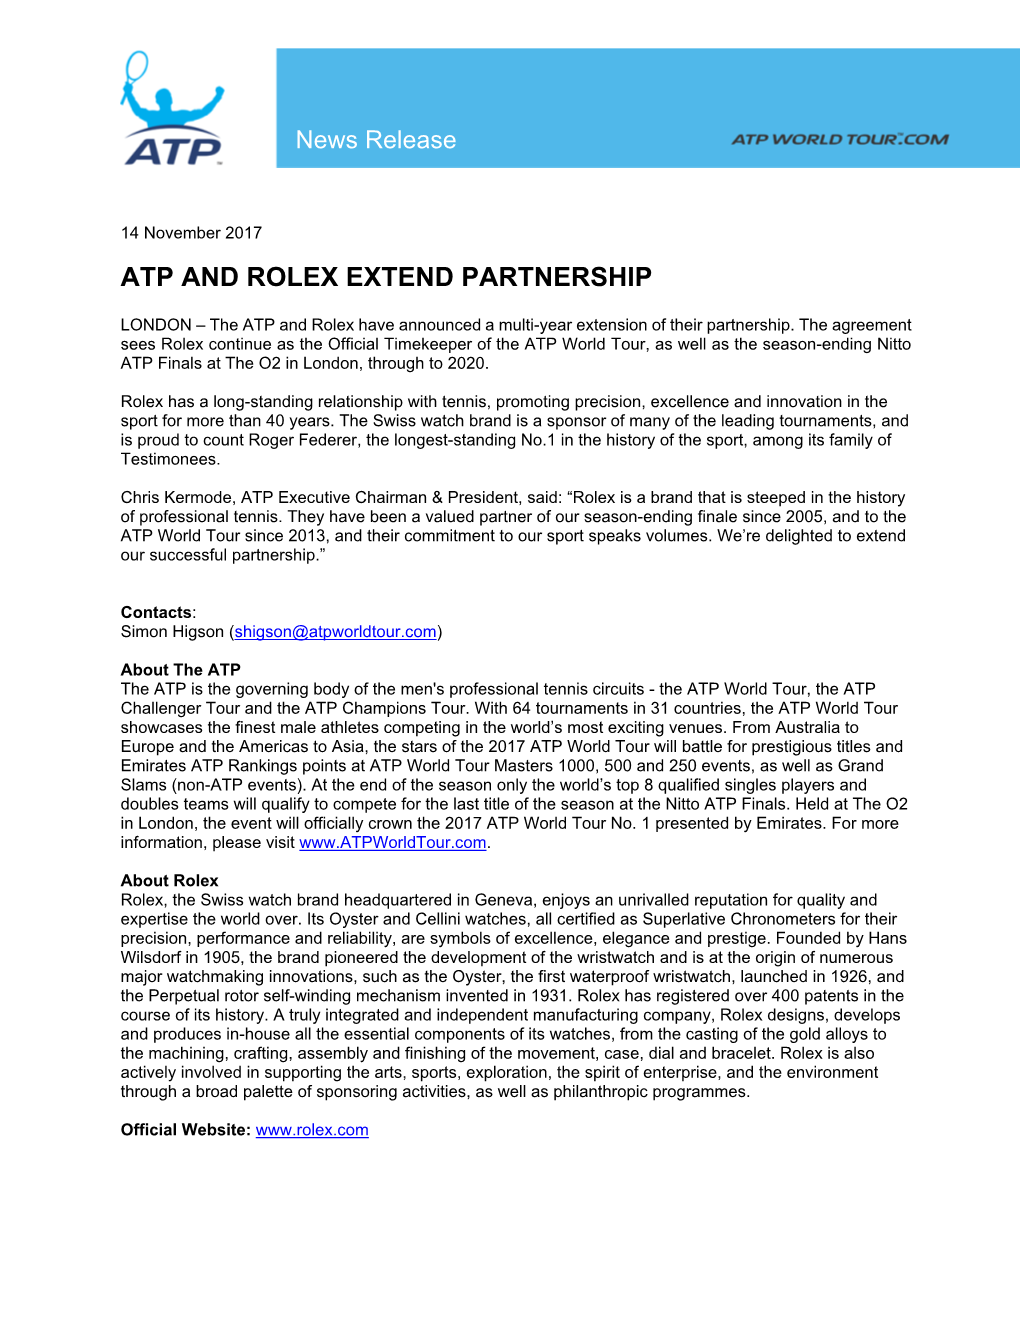 Atp and Rolex Extend Partnership